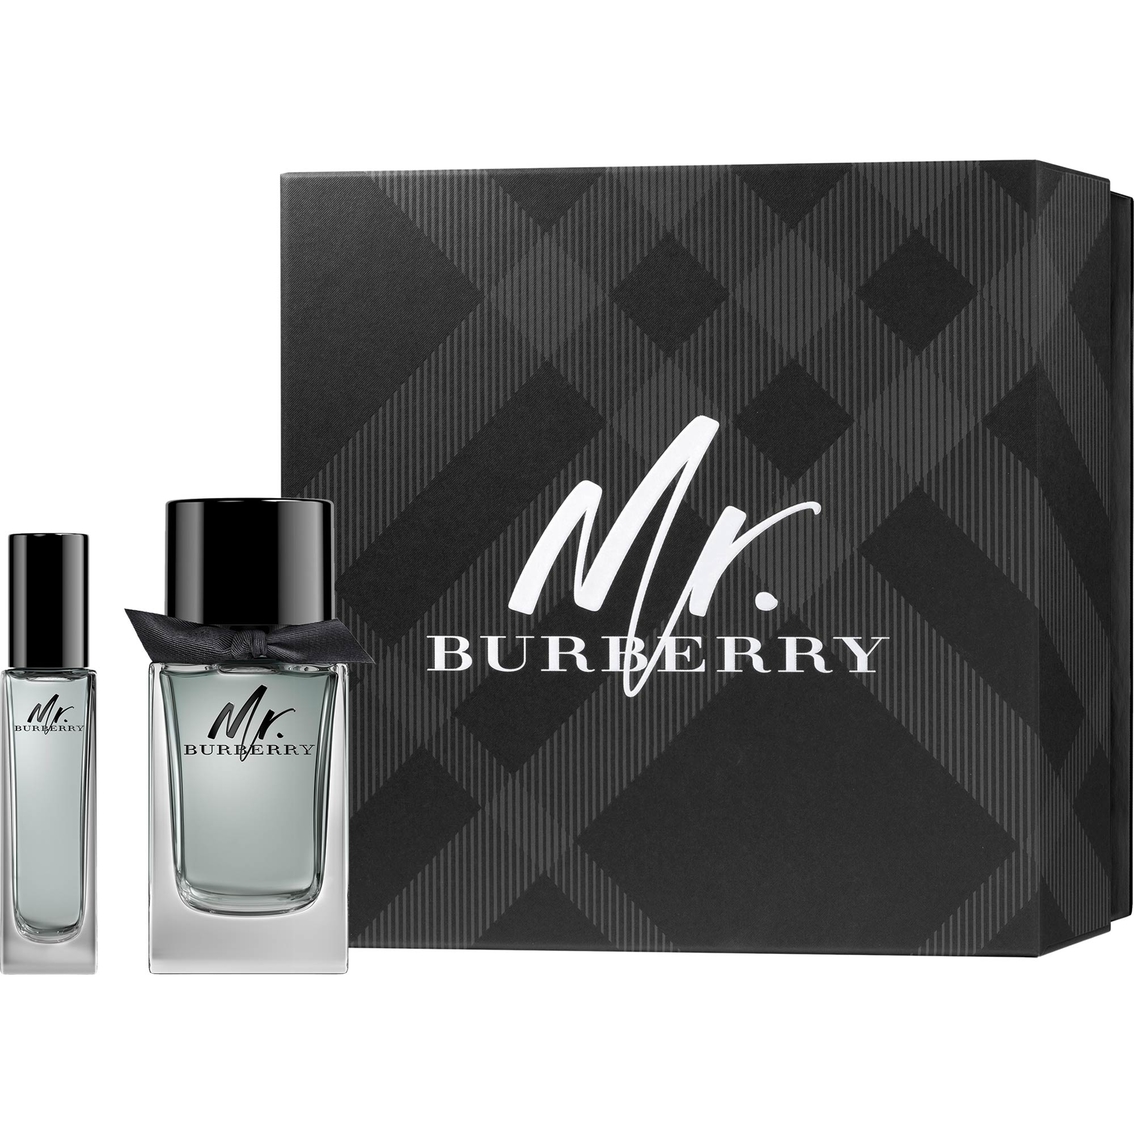 Burberry Mr. Burberry Eau De Toilette 2 Pc. Set | Gifts Sets For Him | Valentine's Gift Guide | Shop The Exchange